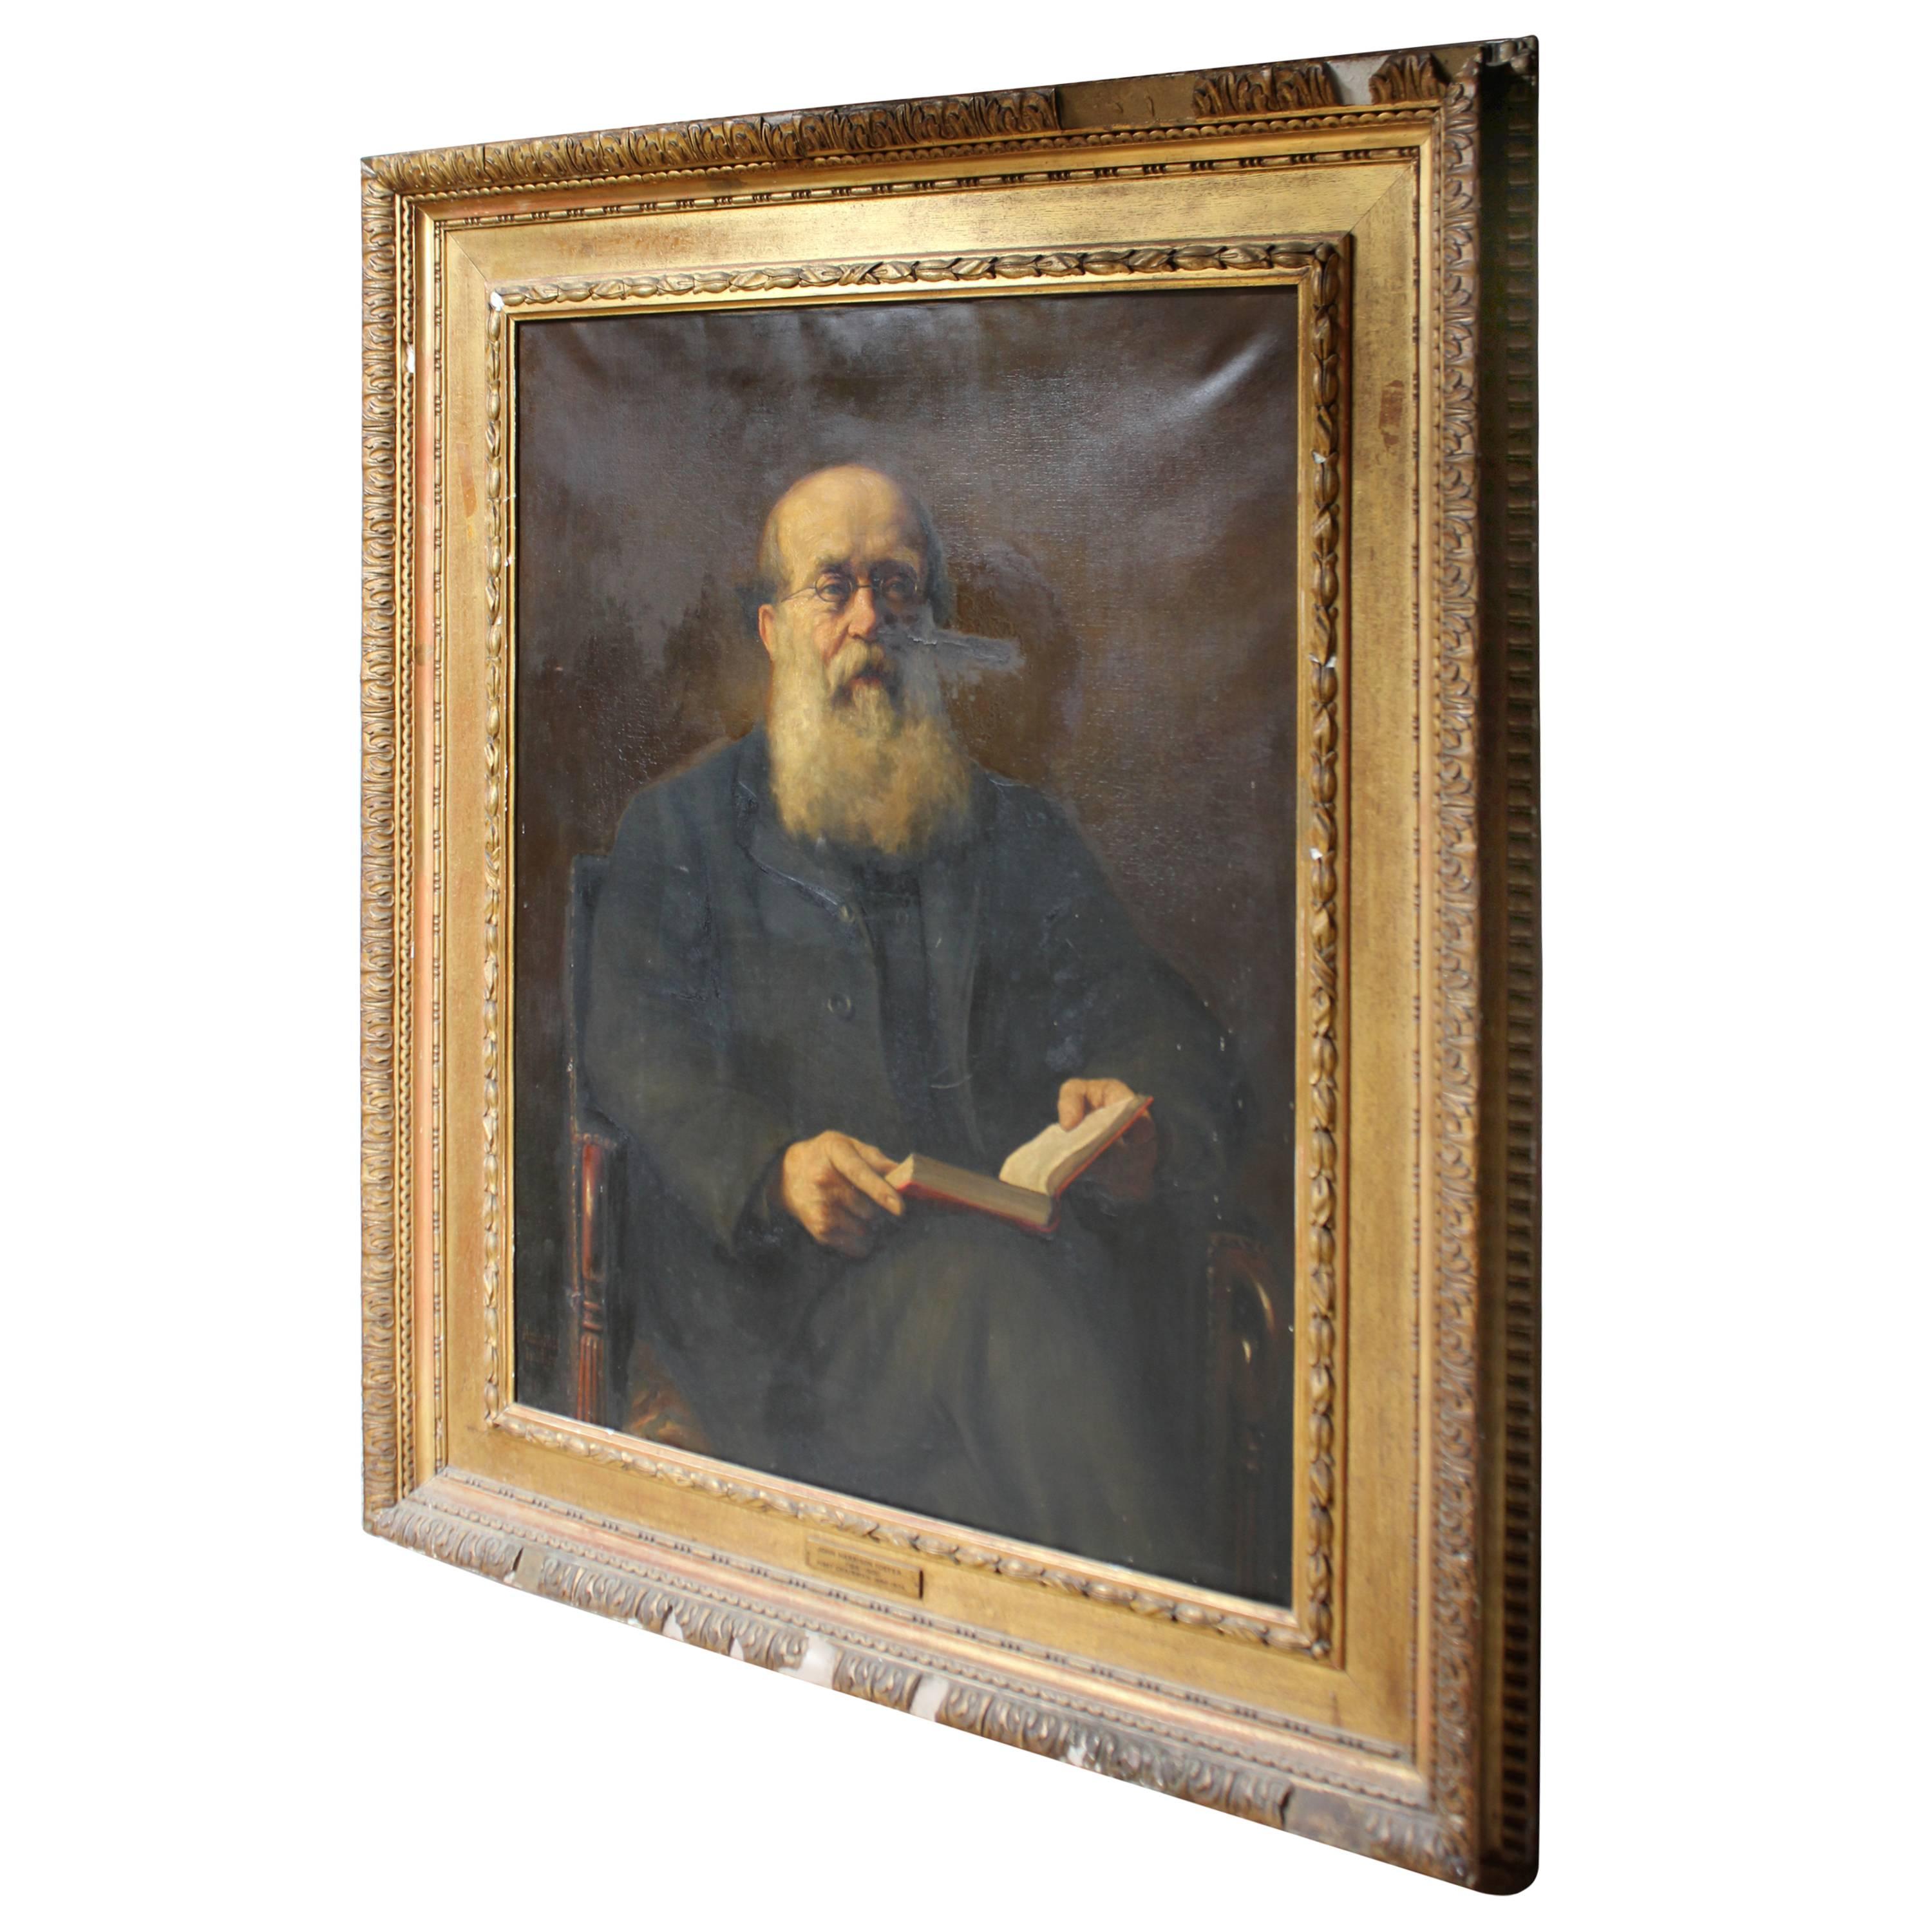 Ambrose Dudley, A Large English School, Gilt Framed Oil on Canvas Portrait